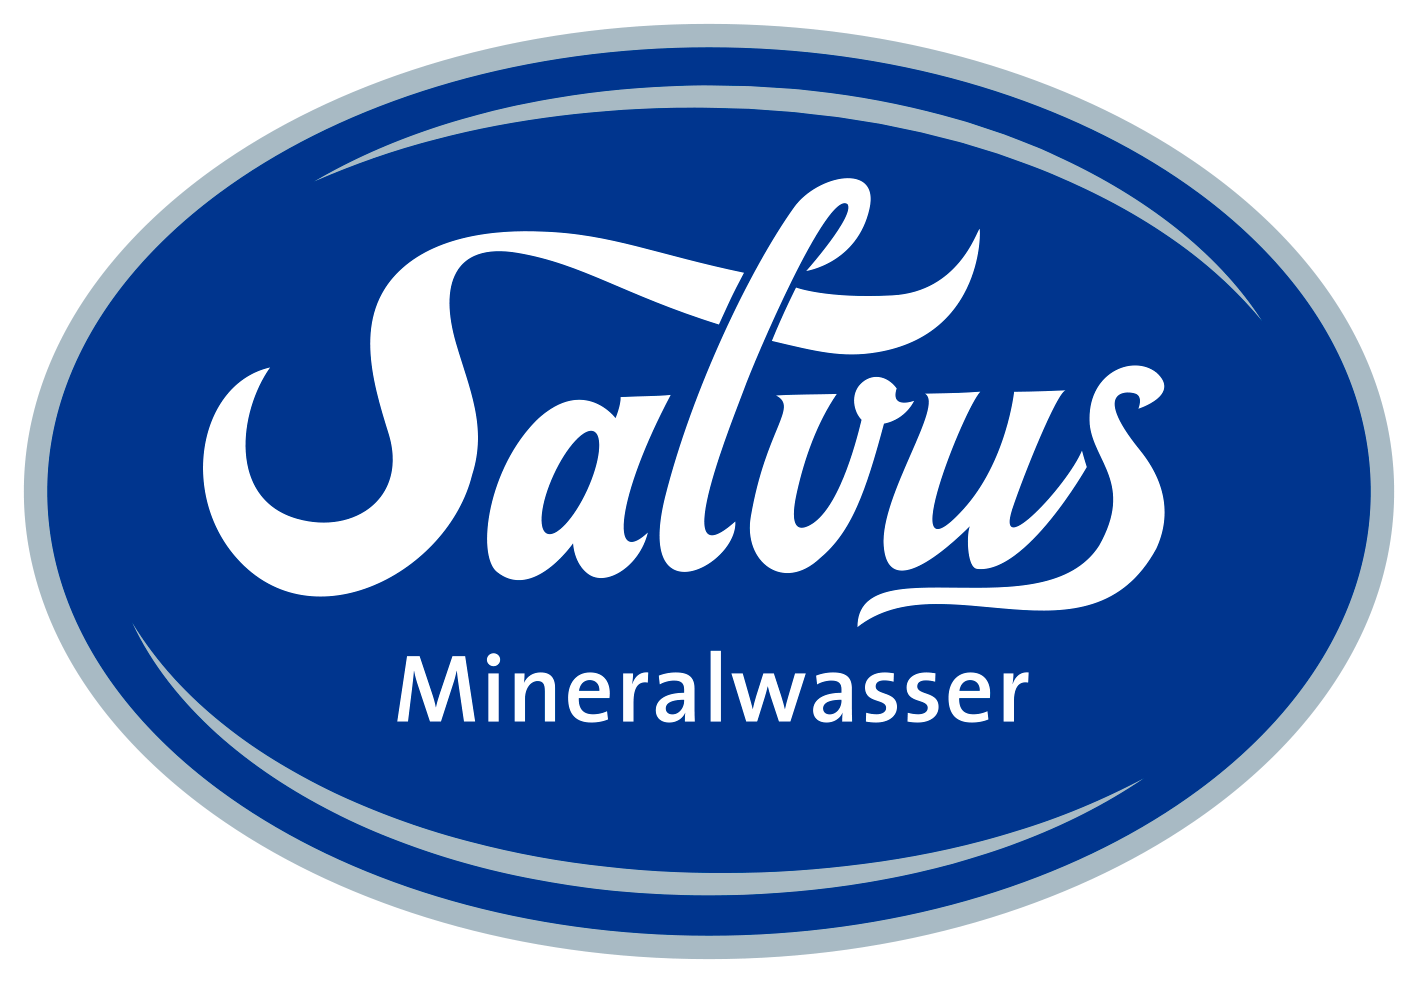 Salvus Mineralbrunnen GmbH